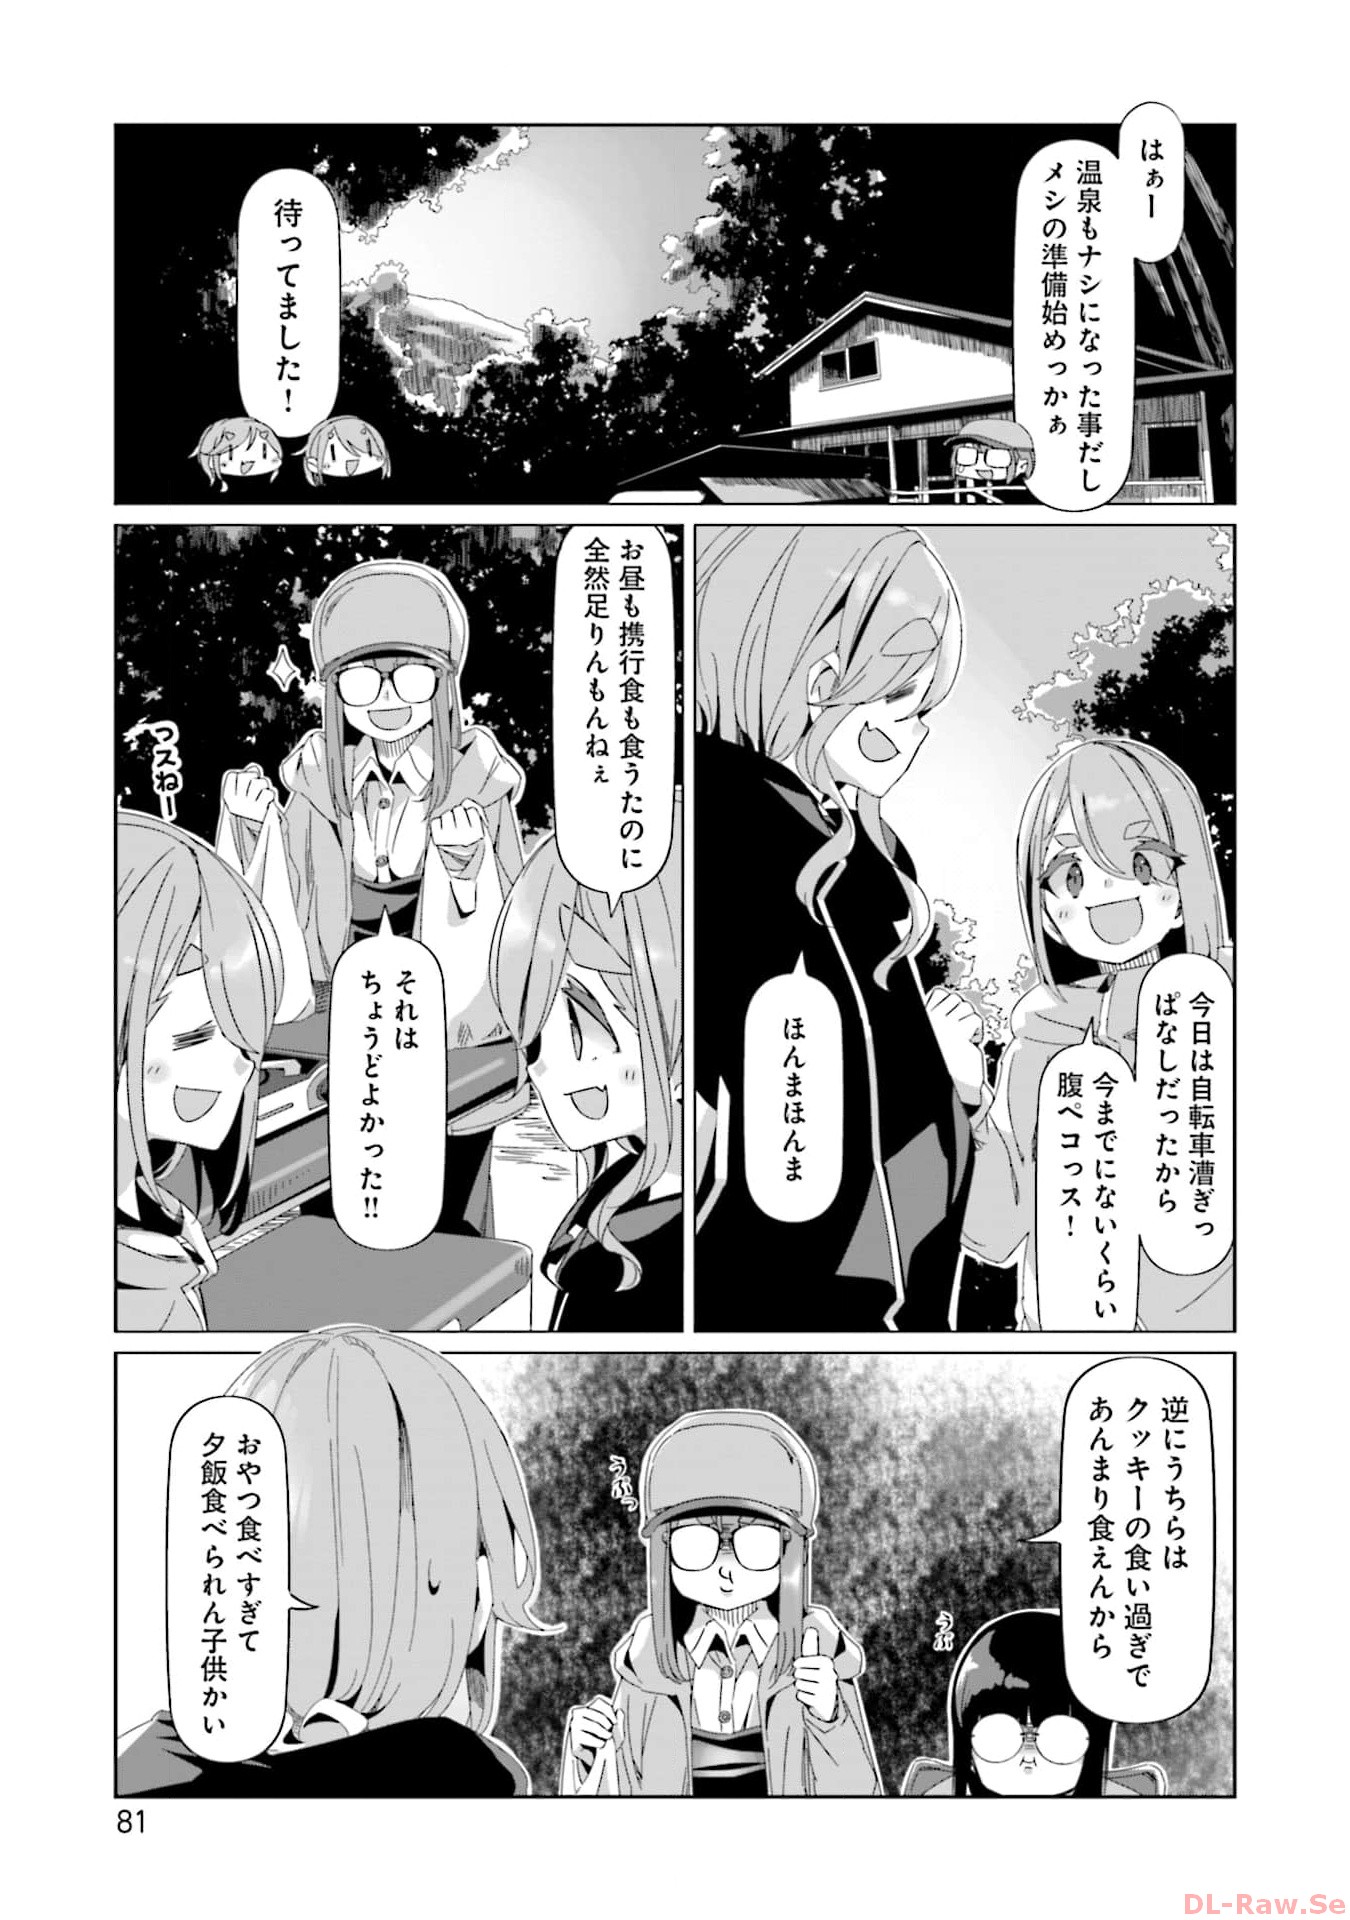 Yuru Camp - Chapter 85 - Page 1